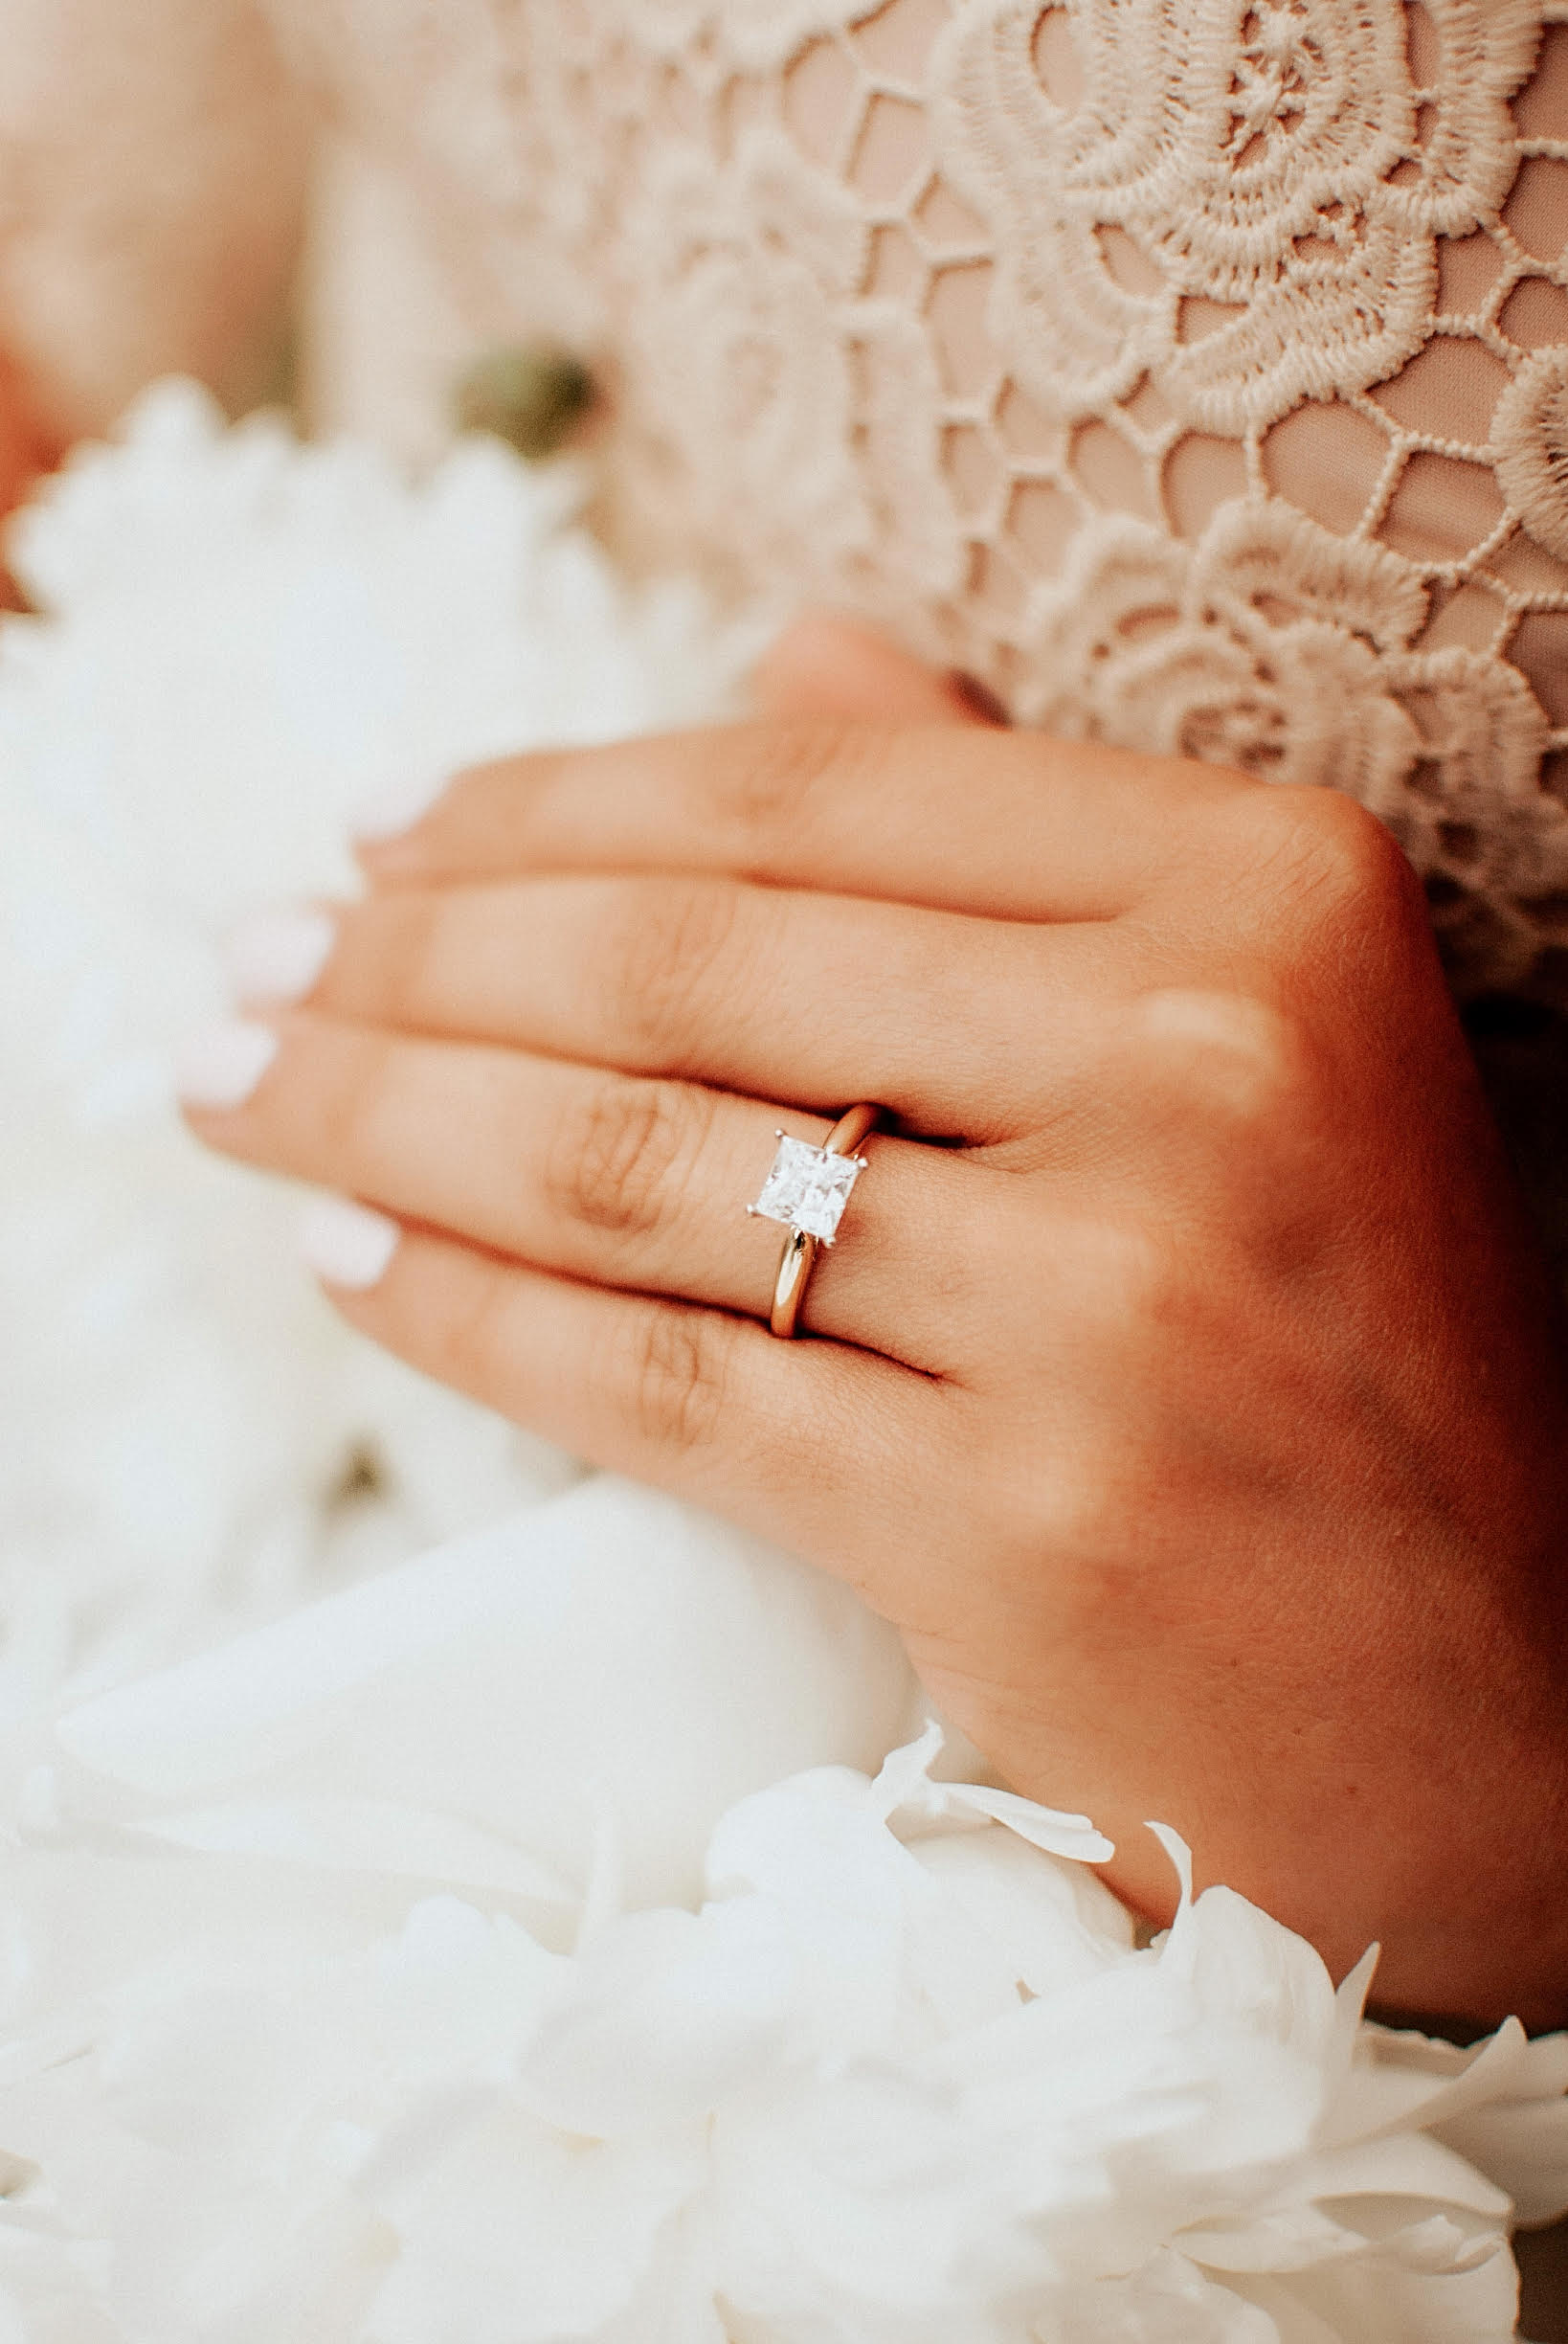  The-perfect-engagement-ring-solitaire-princess-cut-ring-vanessa-lambert-macys-star-signature-diamond